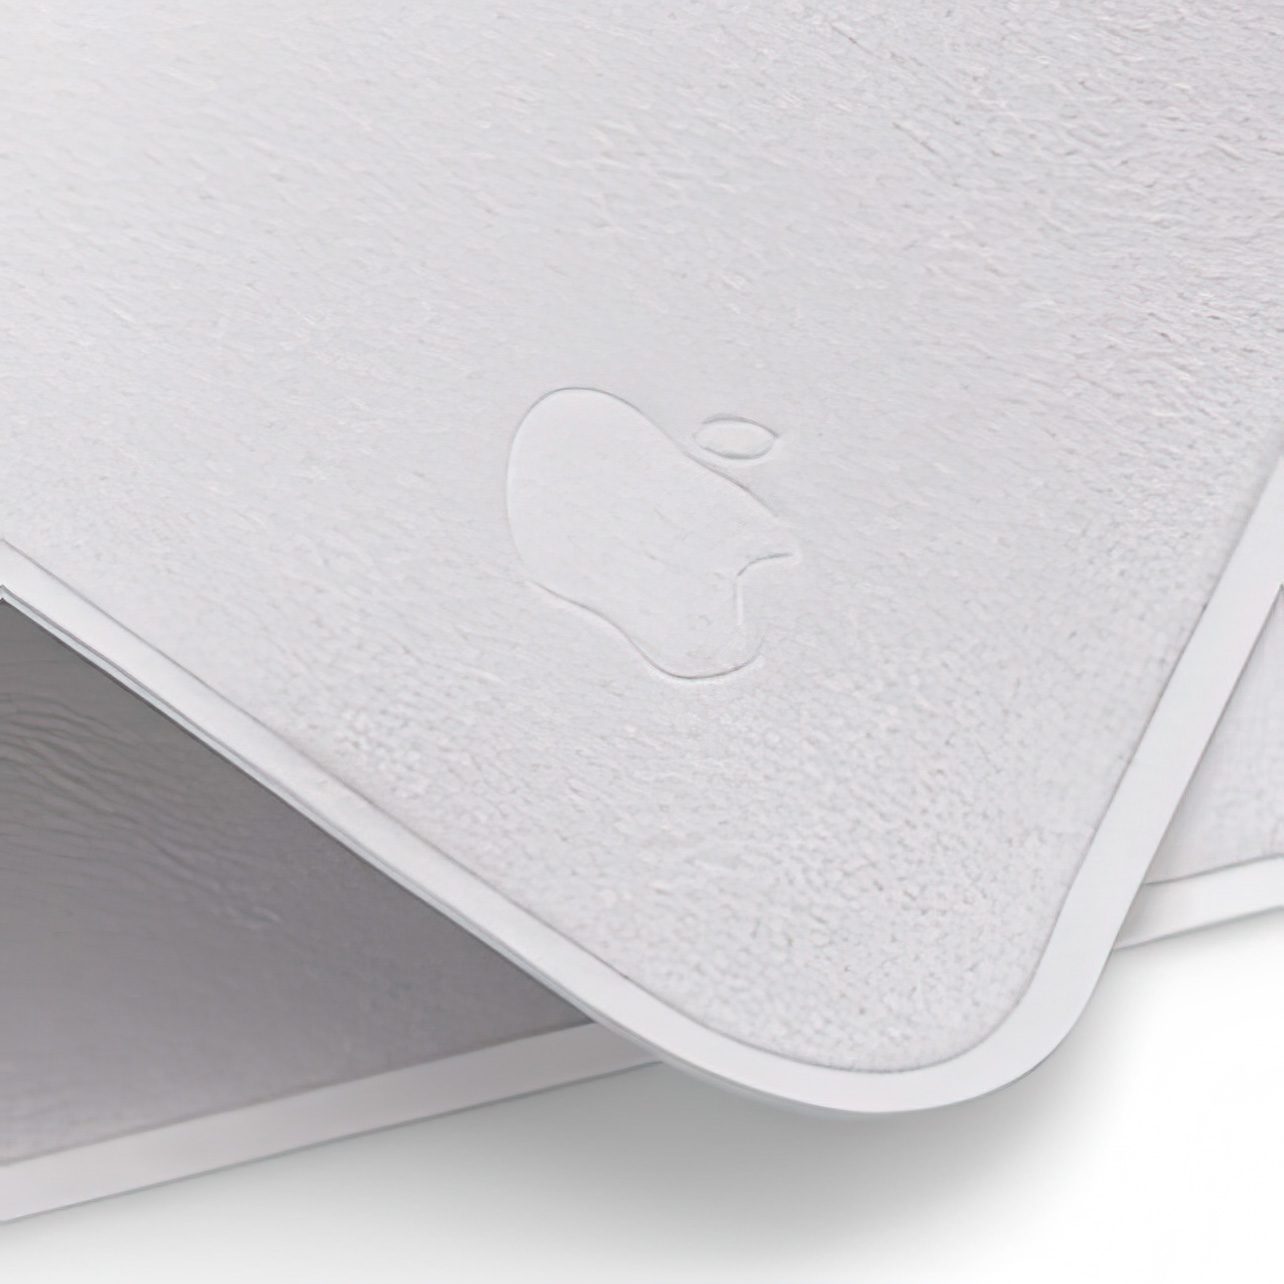 Ecran Apple : Apple vend un chiffon nettoyeur à25 euros